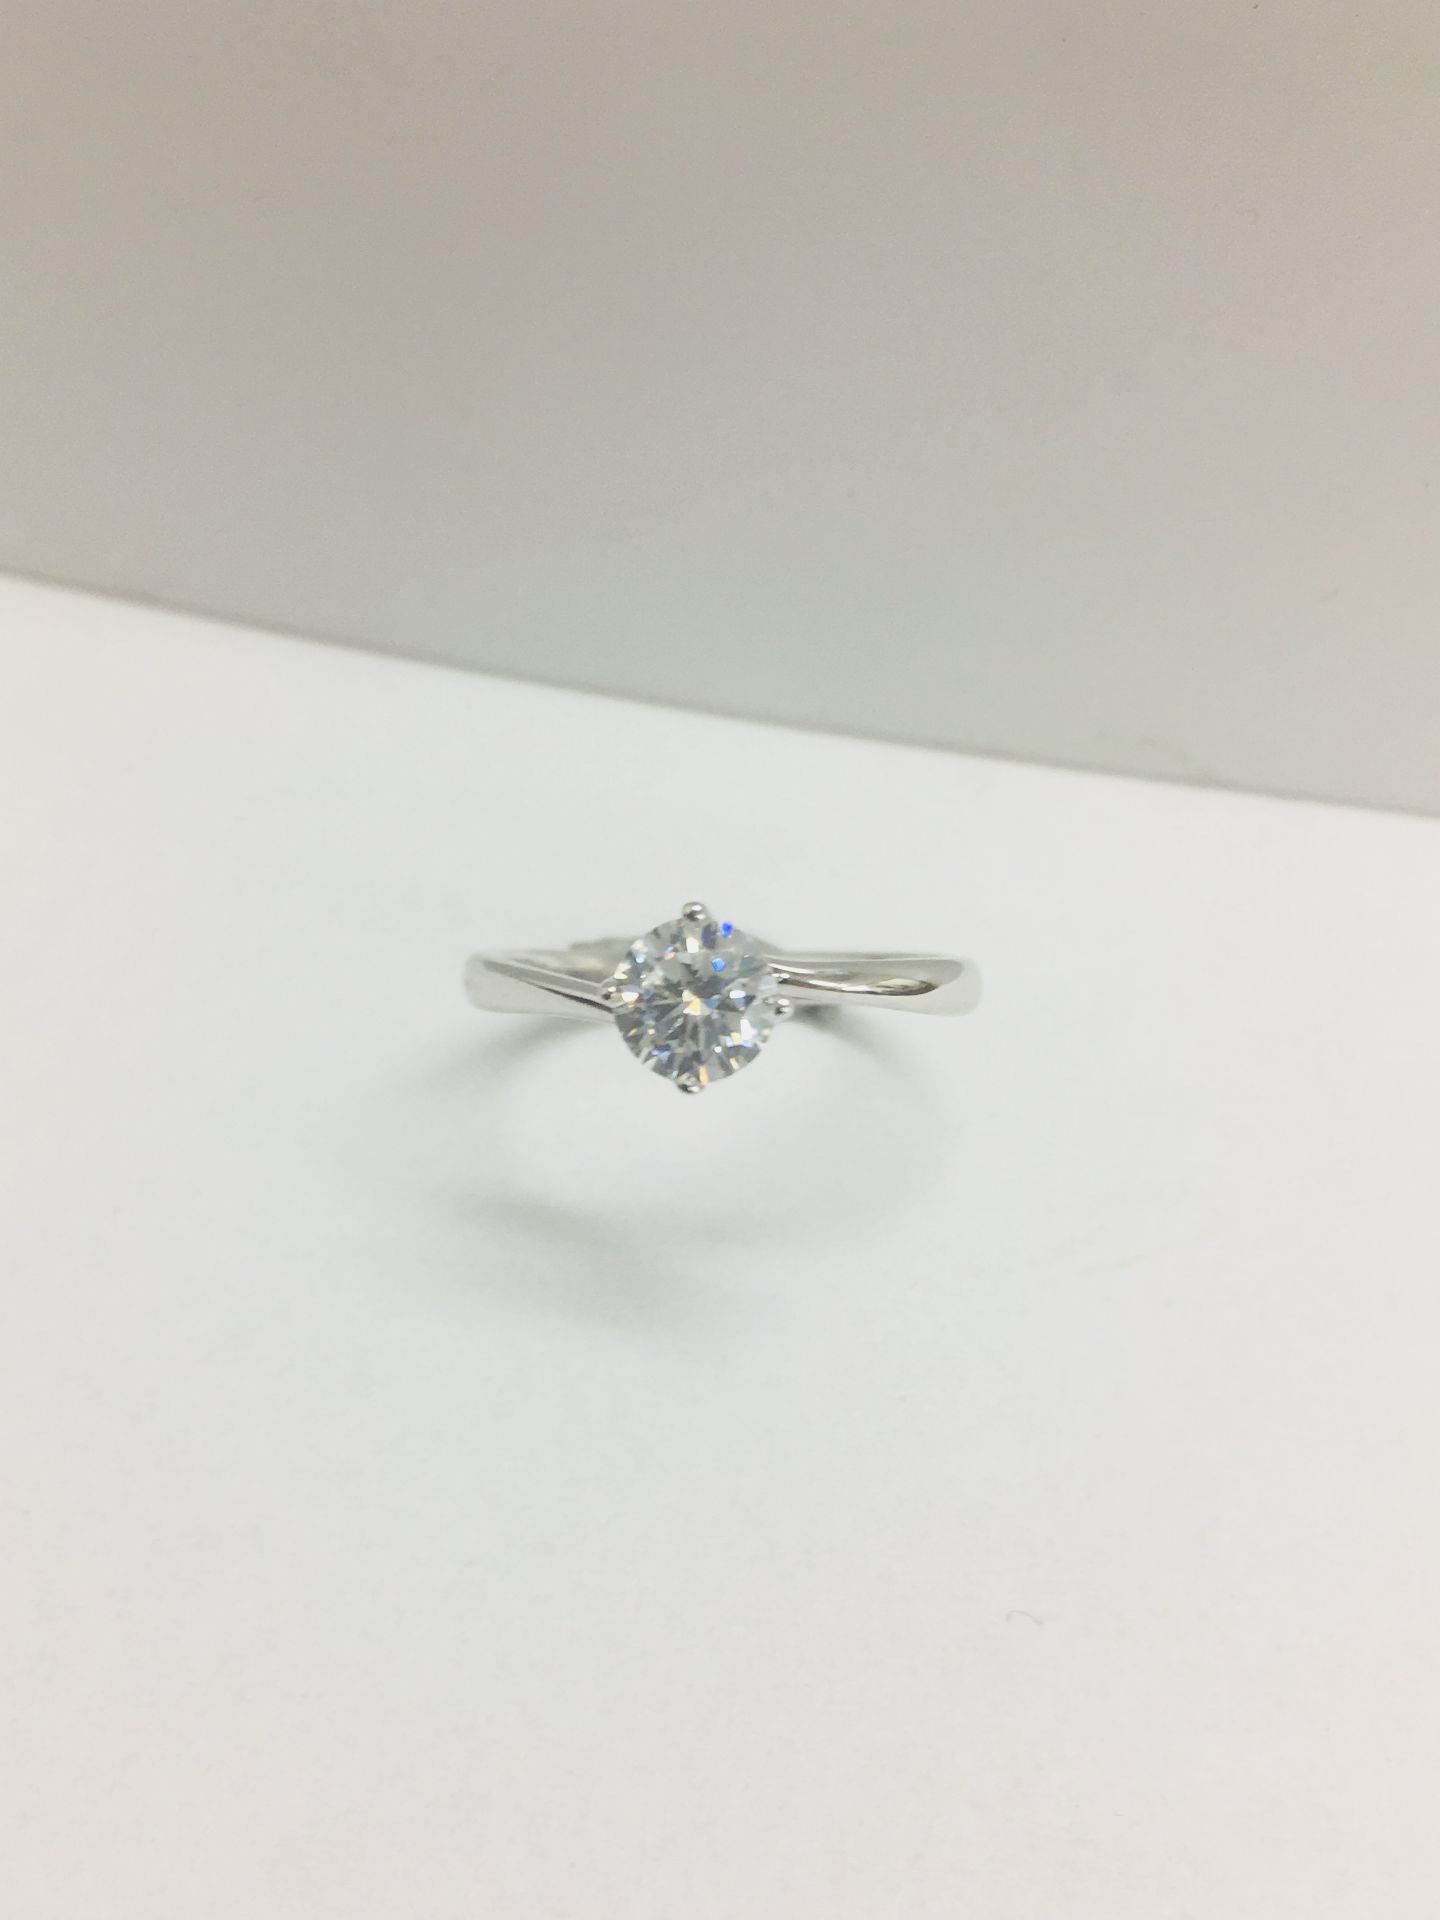 Platinum diamond twist style solitaire ring,0.50ct diamond h colour vs clarity (clarity enhanced), - Image 4 of 4